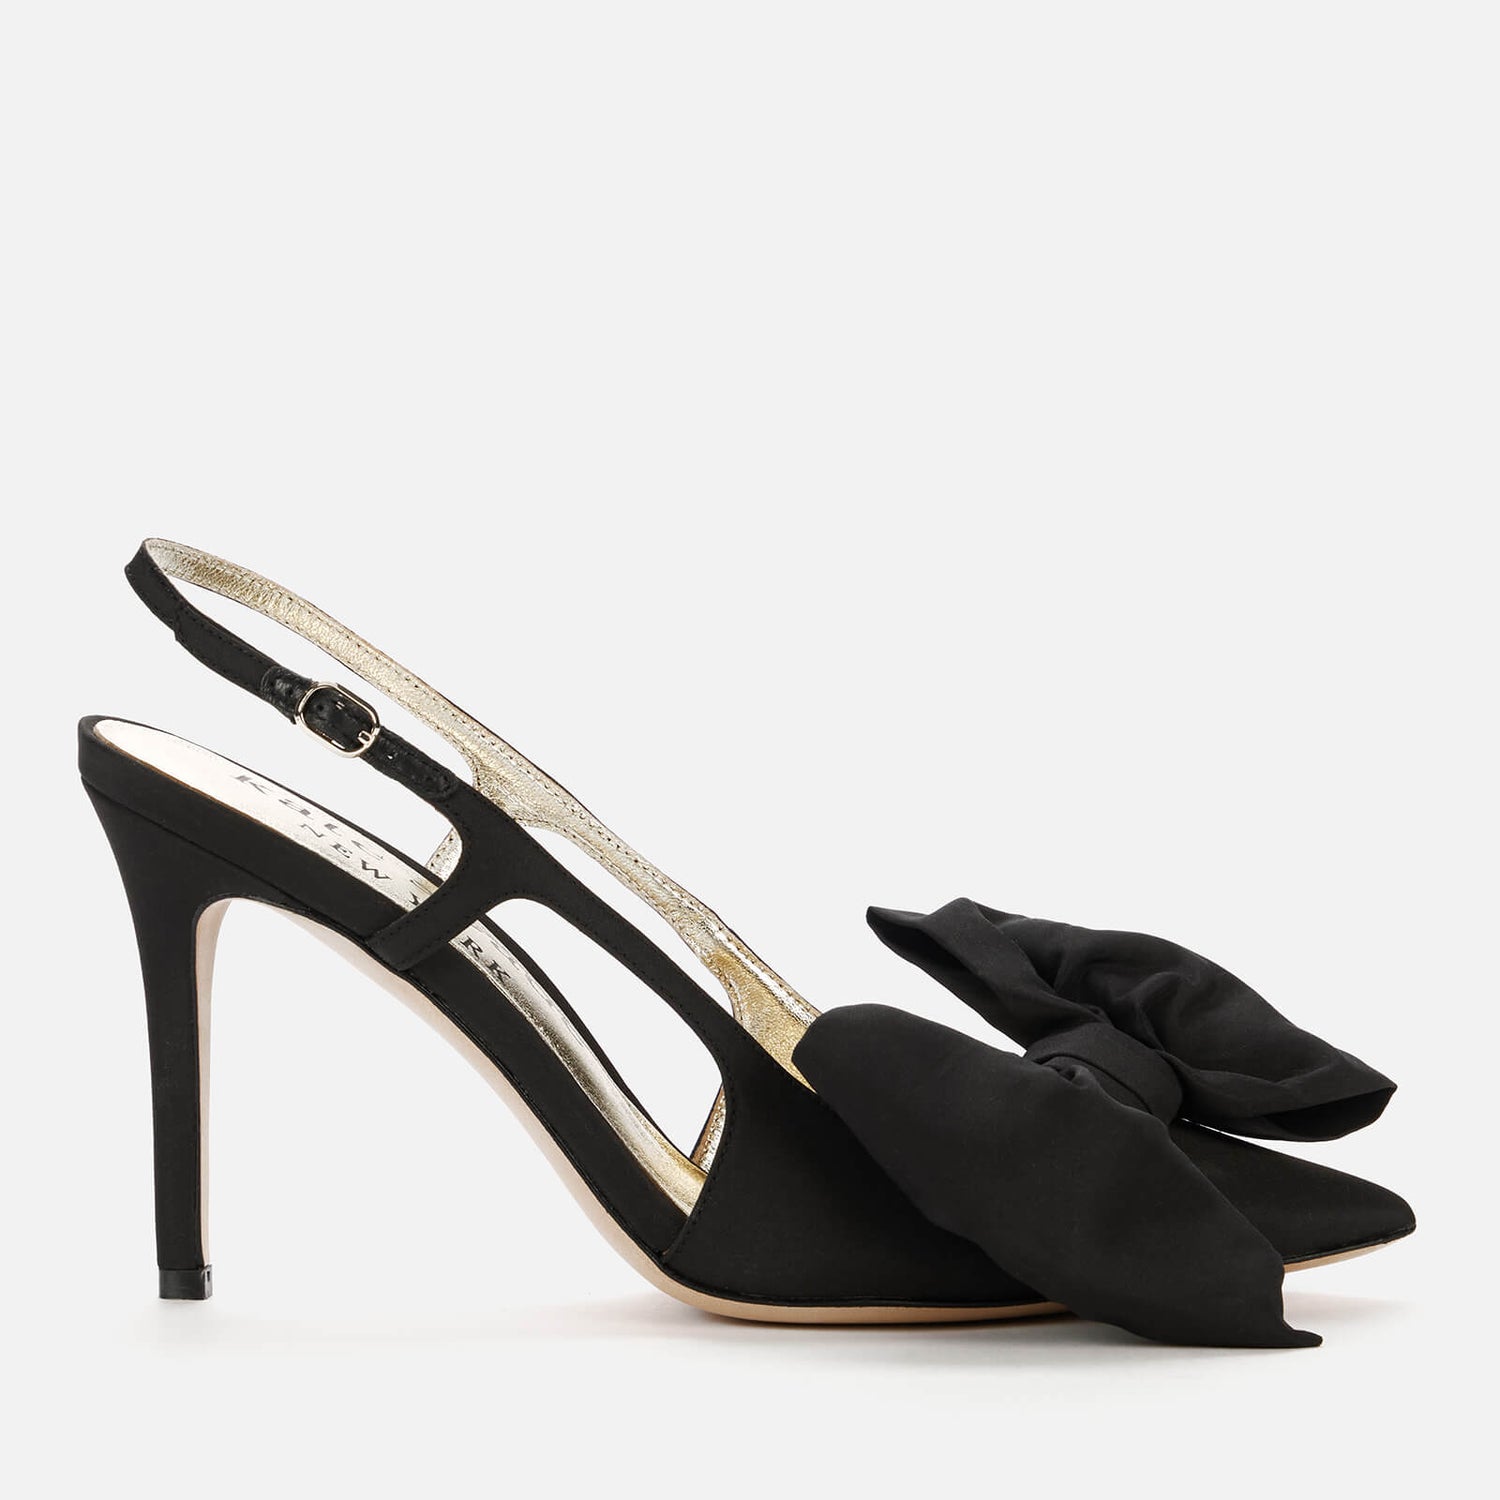 Kate Spade New York Women's Sheela Sling Court Shoes - Black - UK 3